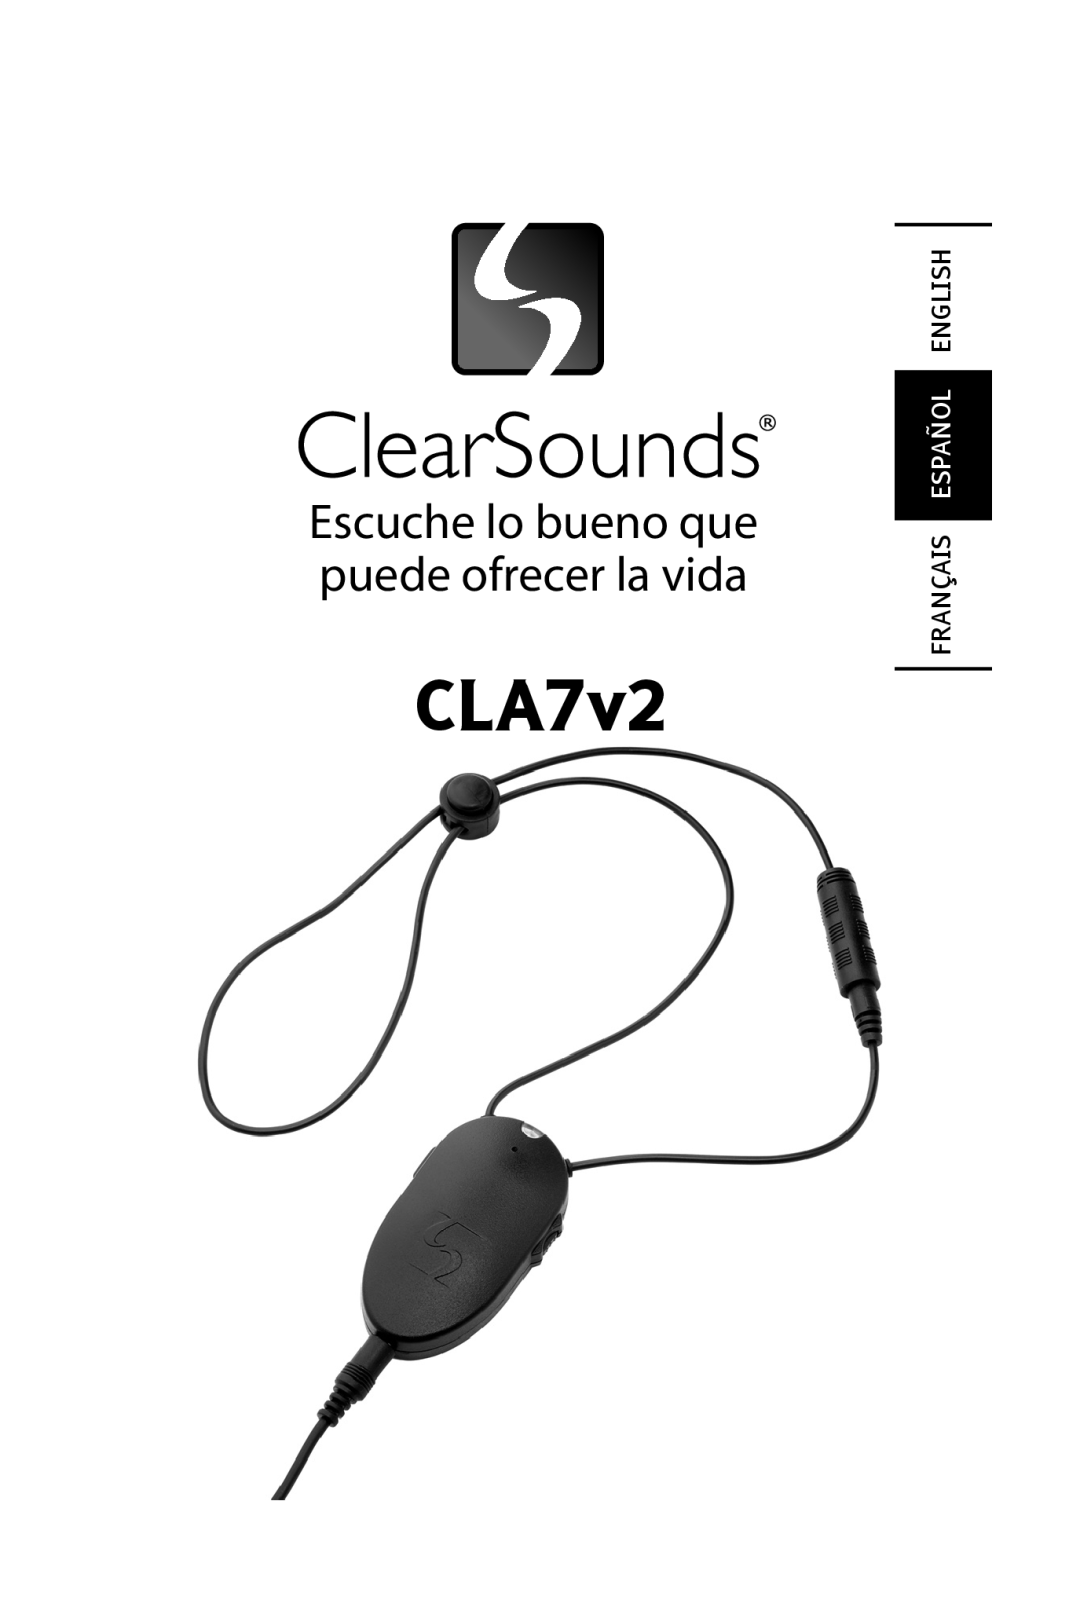 ClearSounds CLA7V2 manual CLA7v2, Escuche lo bueno que puede ofrecer la vida, FRANÇAIS Español English 